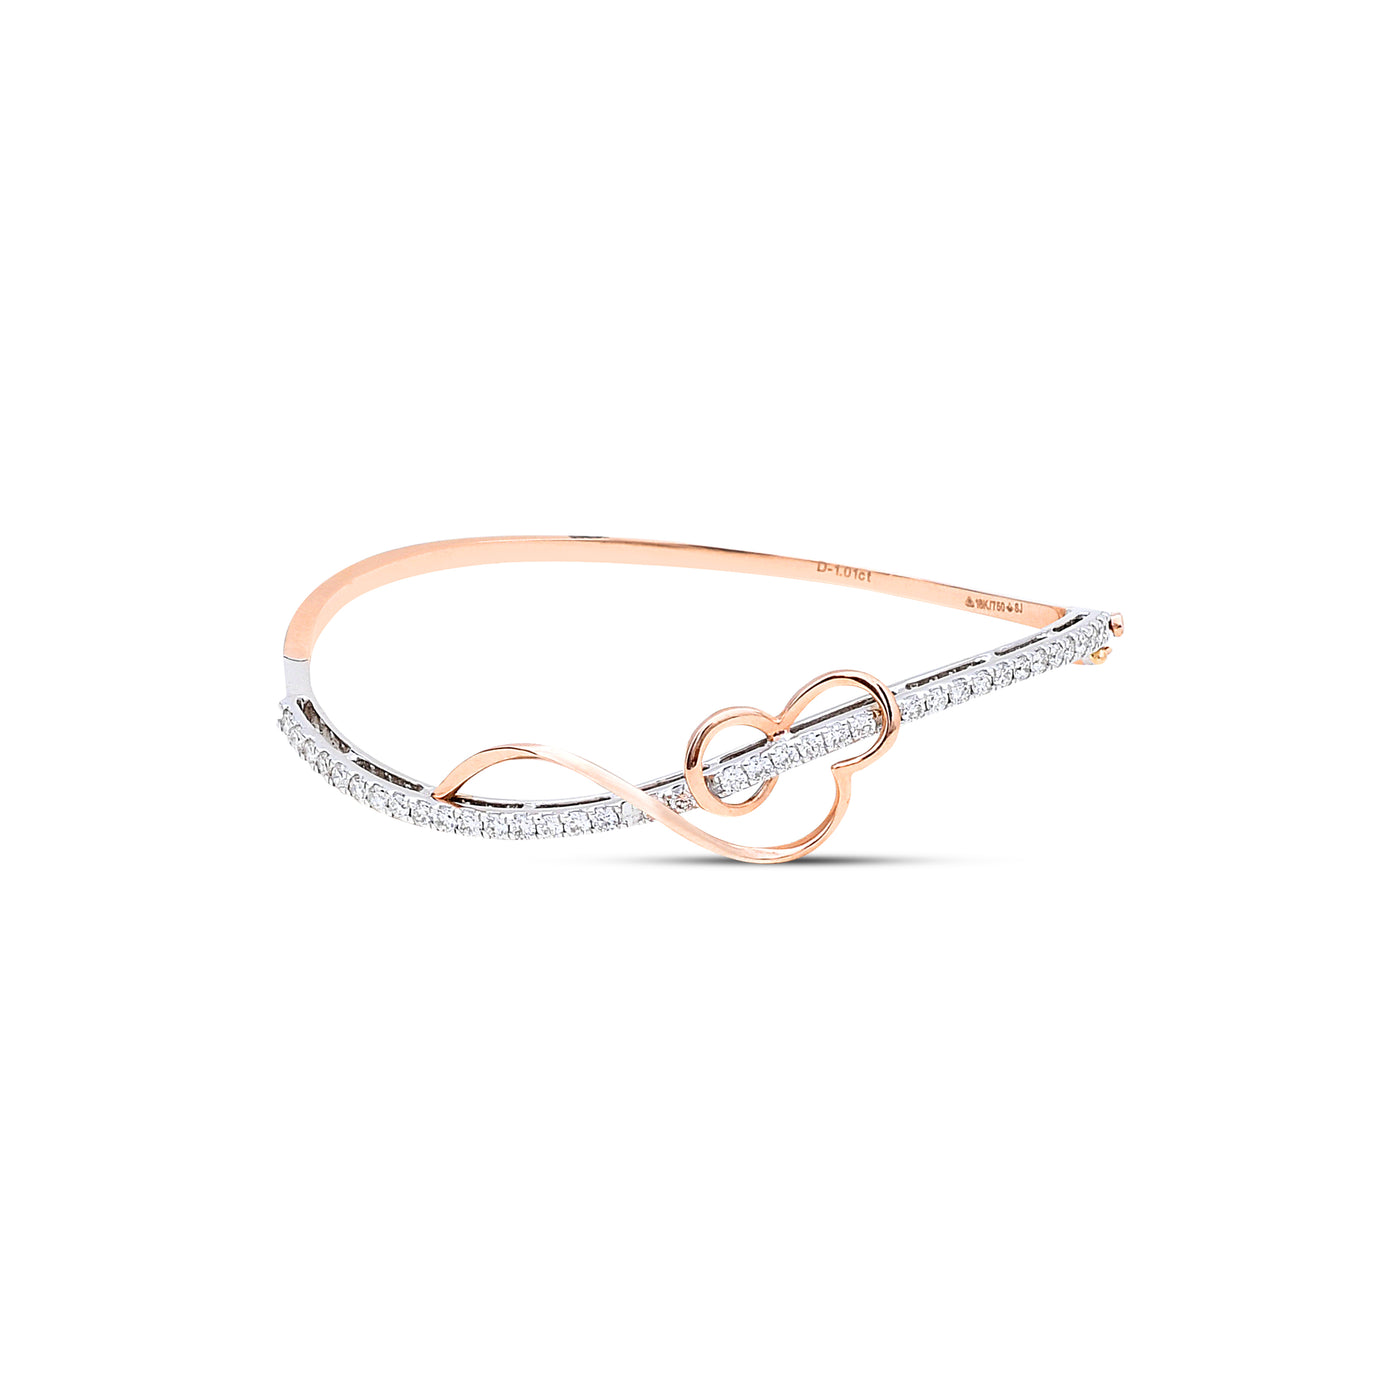 The Azure Diamond Bracelet